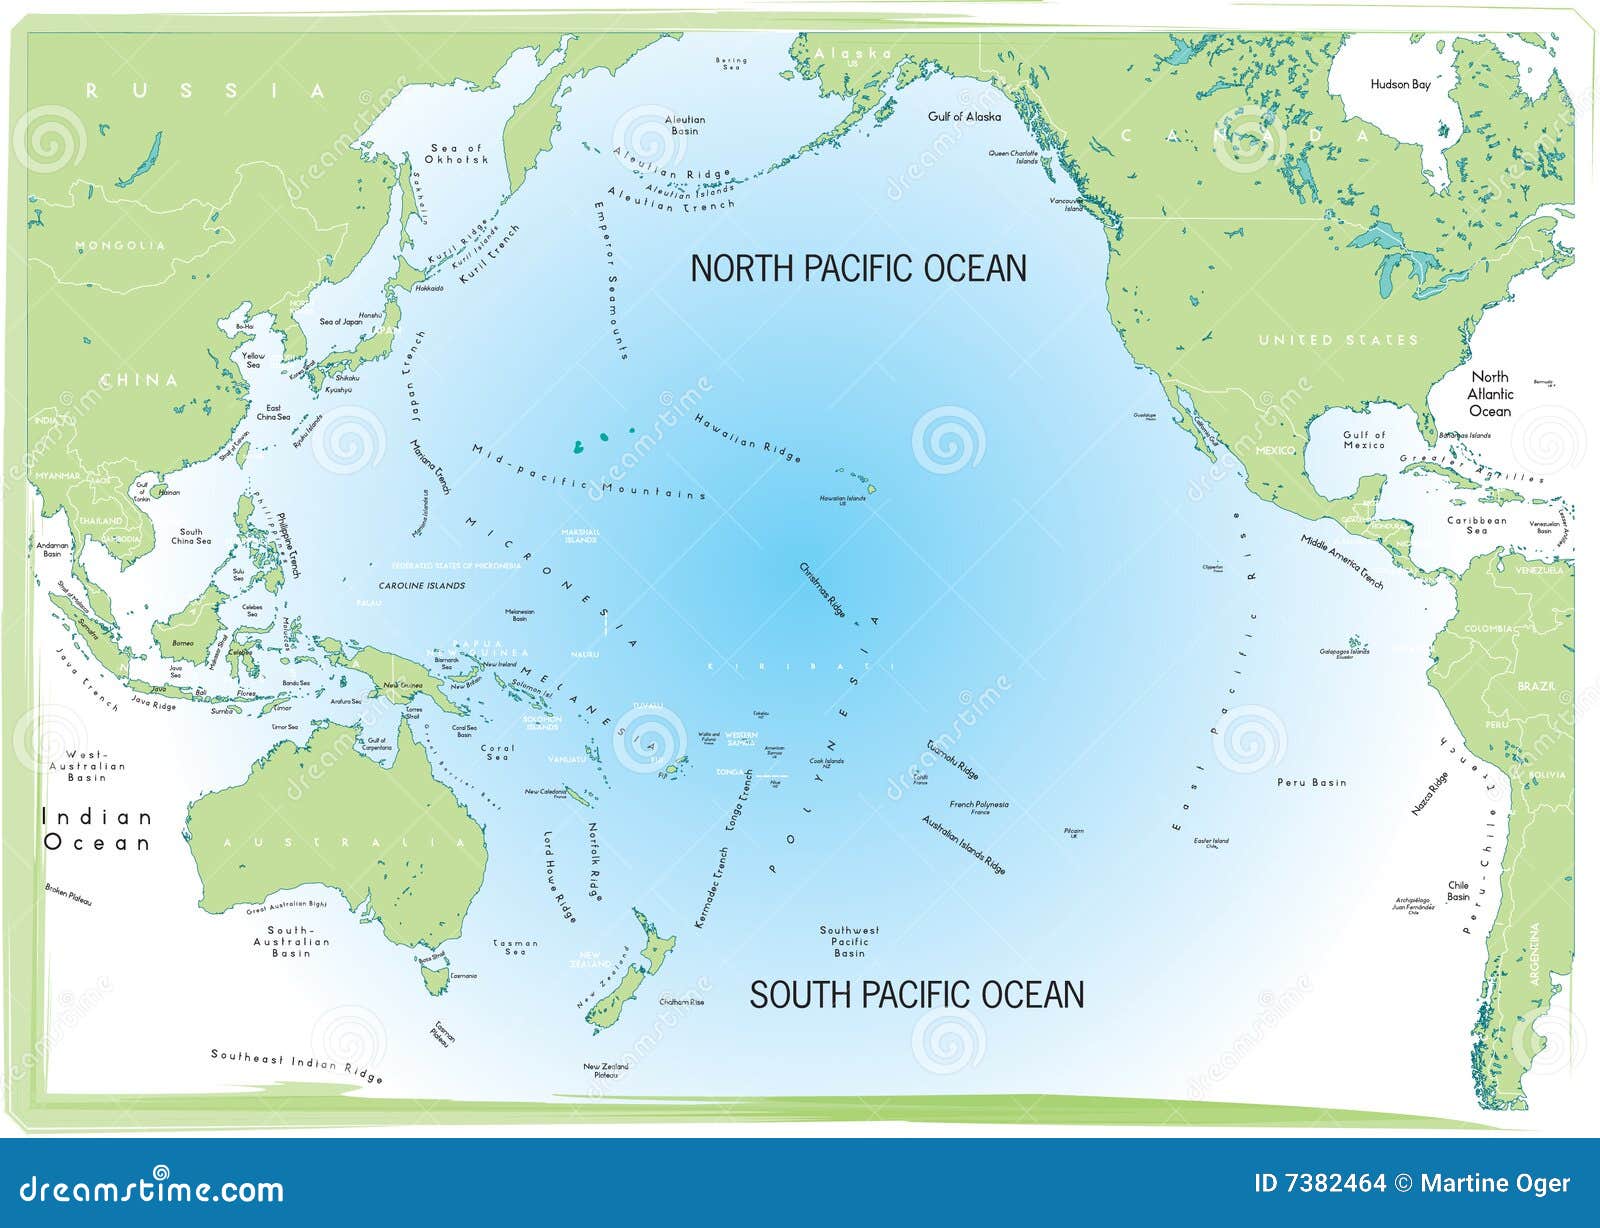 Тест тихий океан. Государства Тихого океана на карте. Pacific Ocean на карте. Тихий океан на карте. Картаттихого океана.